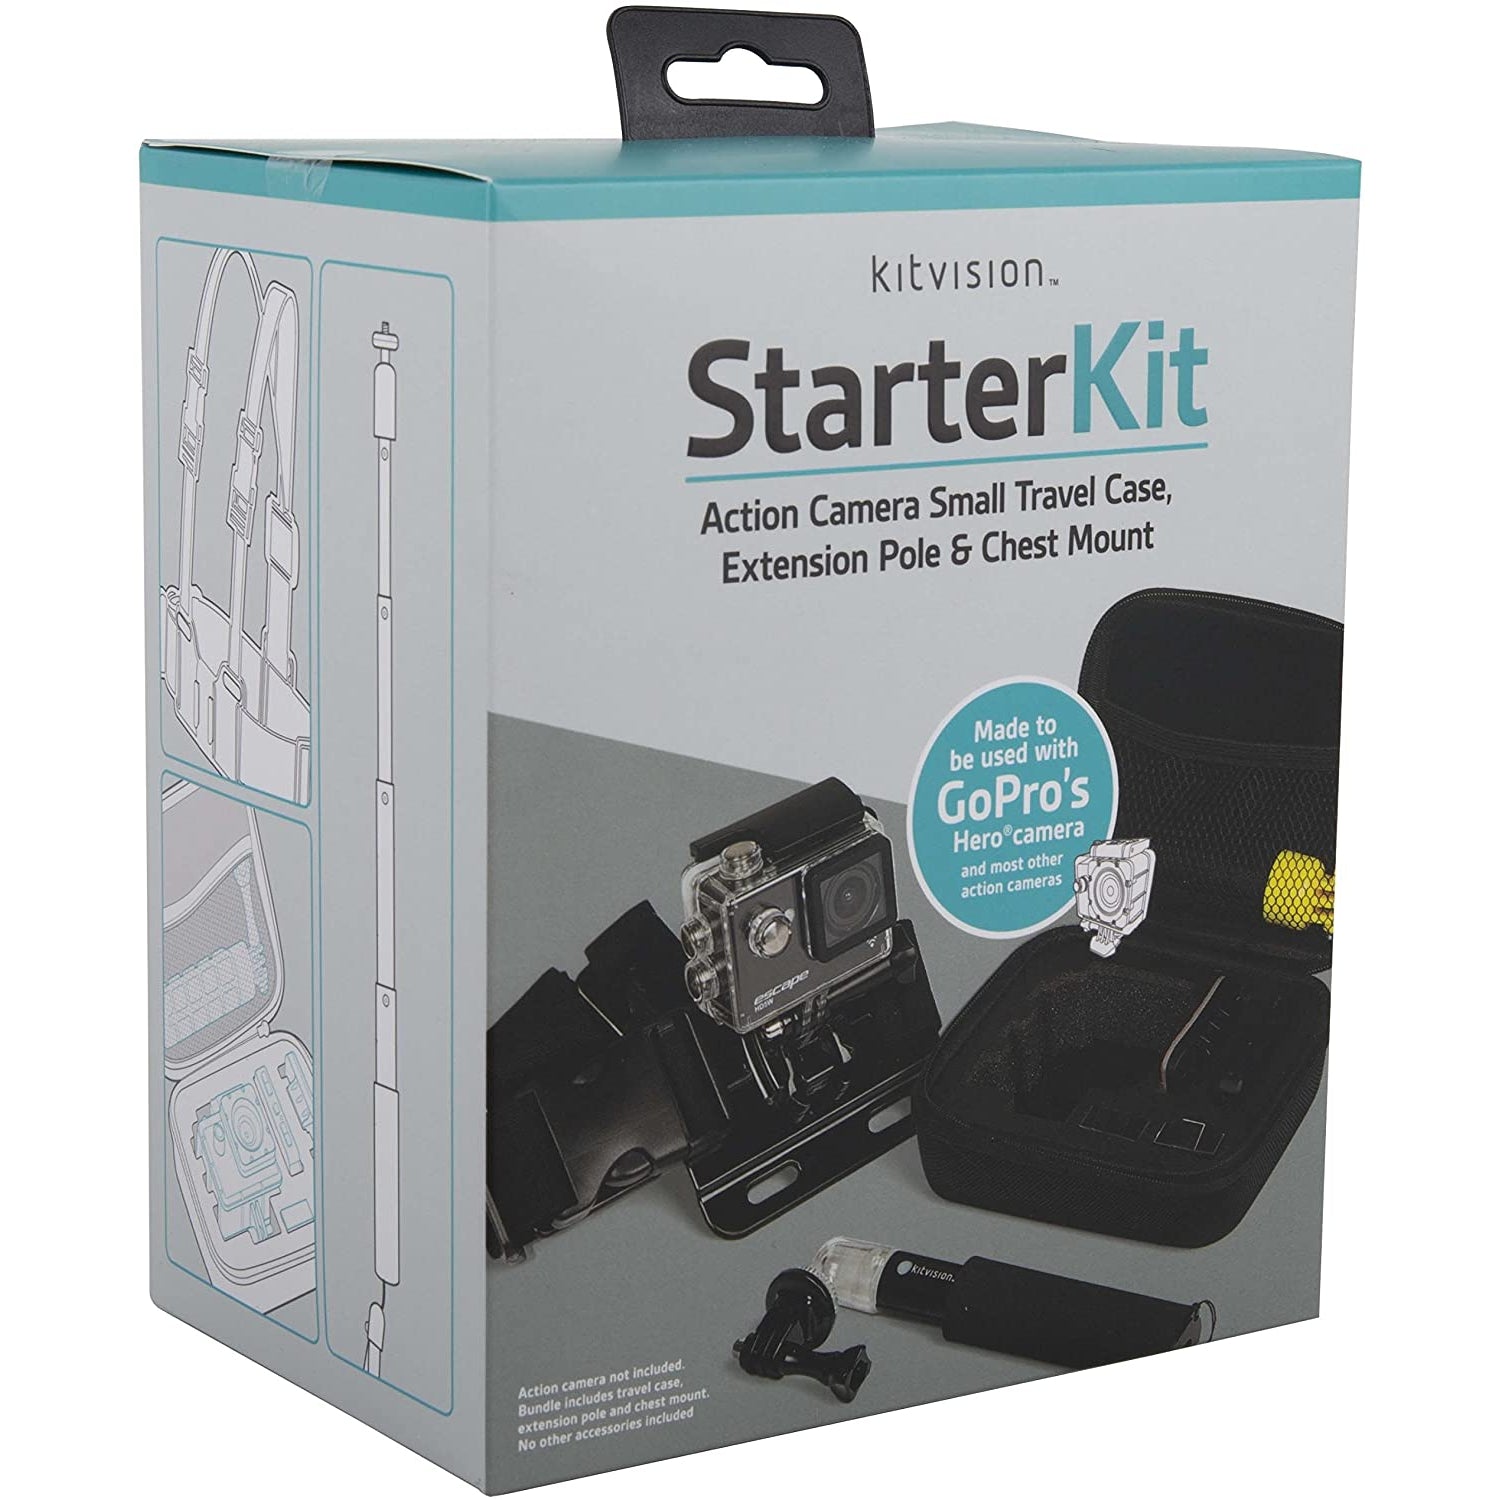 Kitvision Starter Kit Action Camera Small Travel Case Extension Pole & Chest Mount